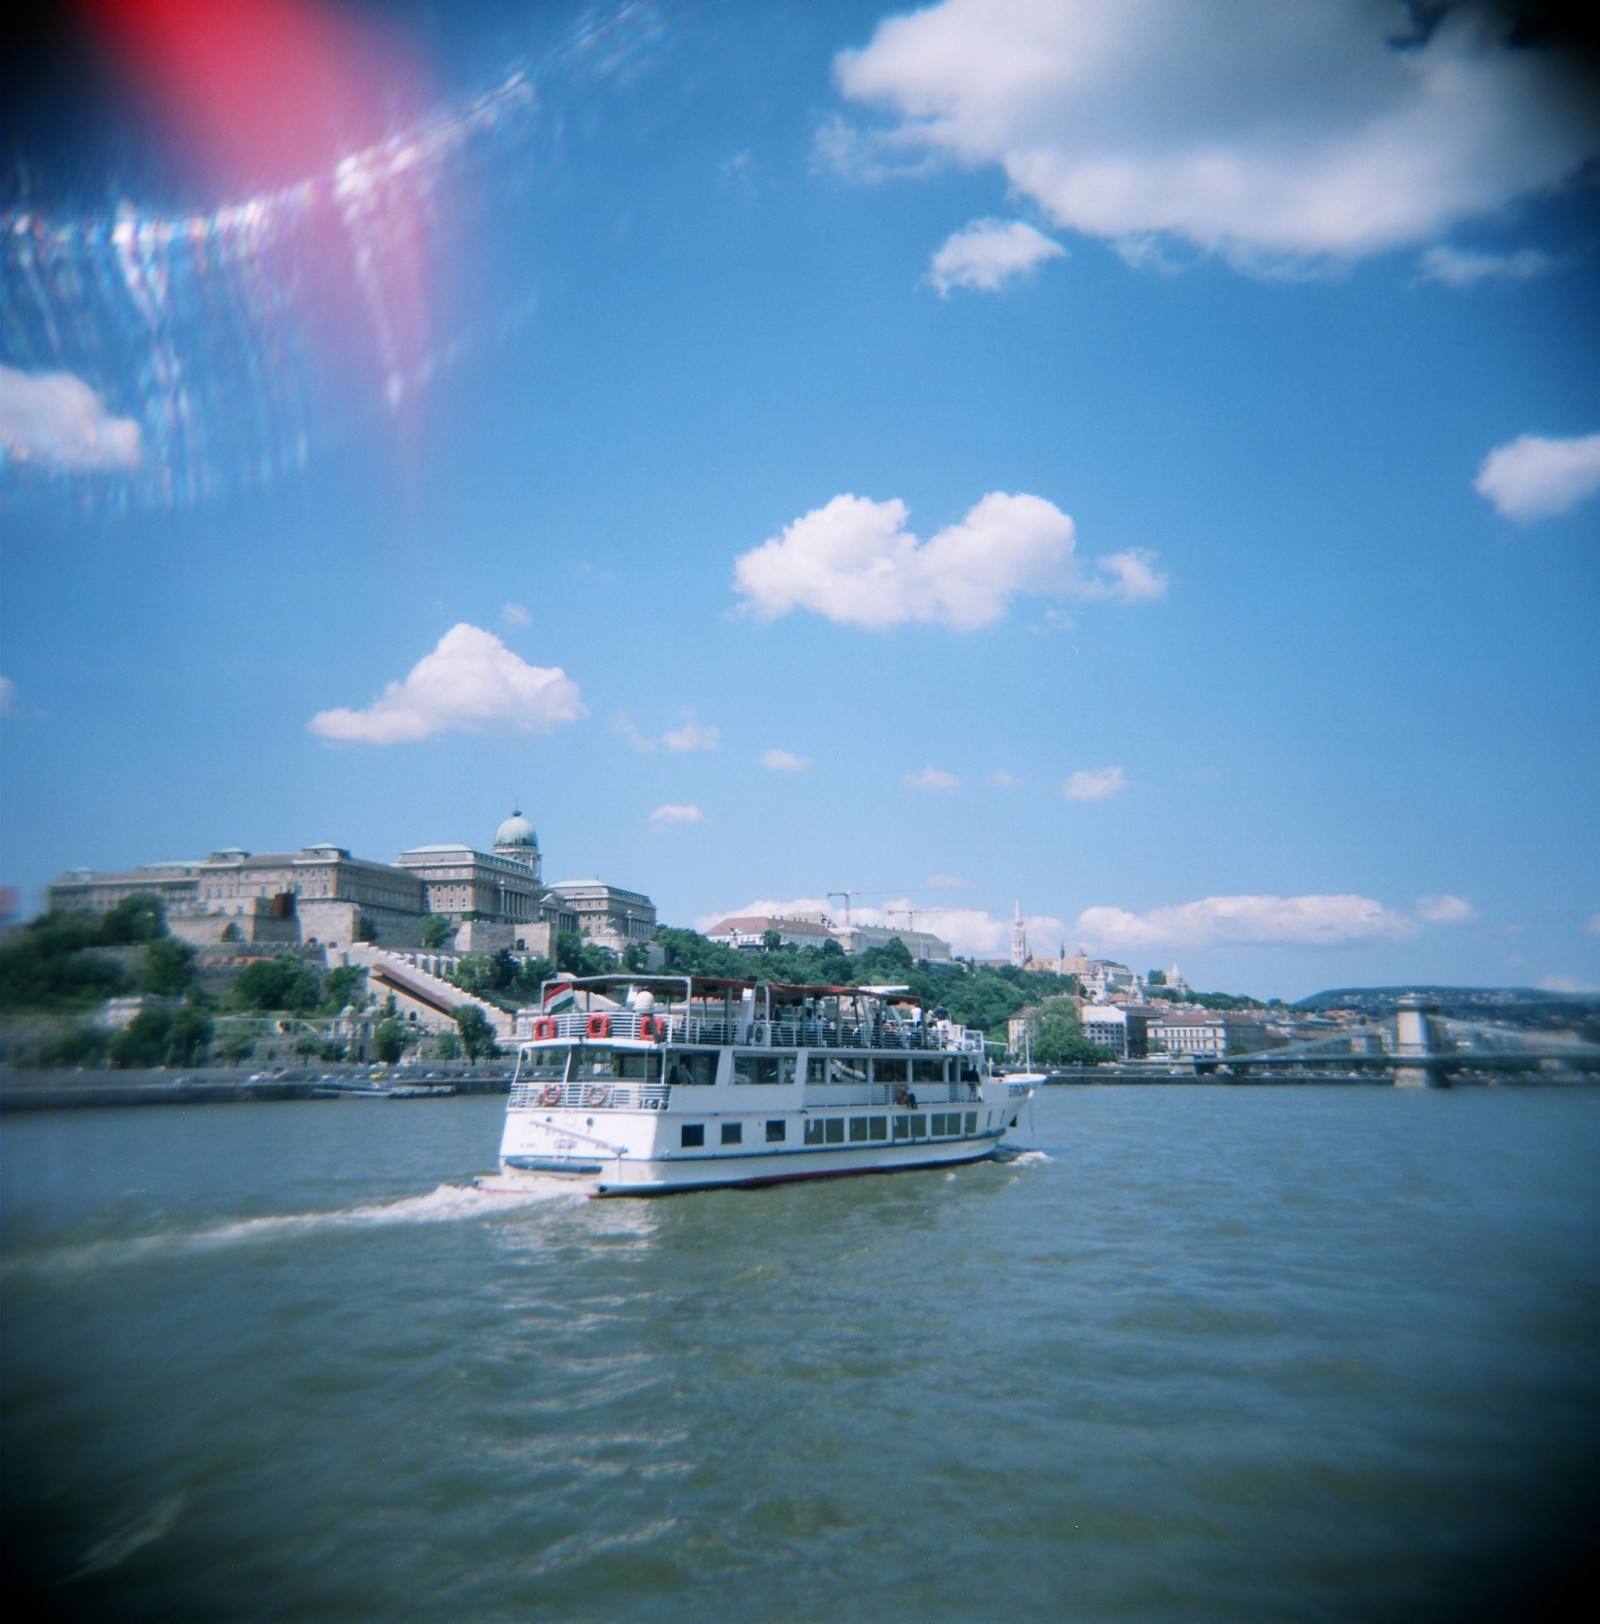 Boat tour in Budapest | River Danuba, taken on 120 colour film using a Holga 120N Lomography camera